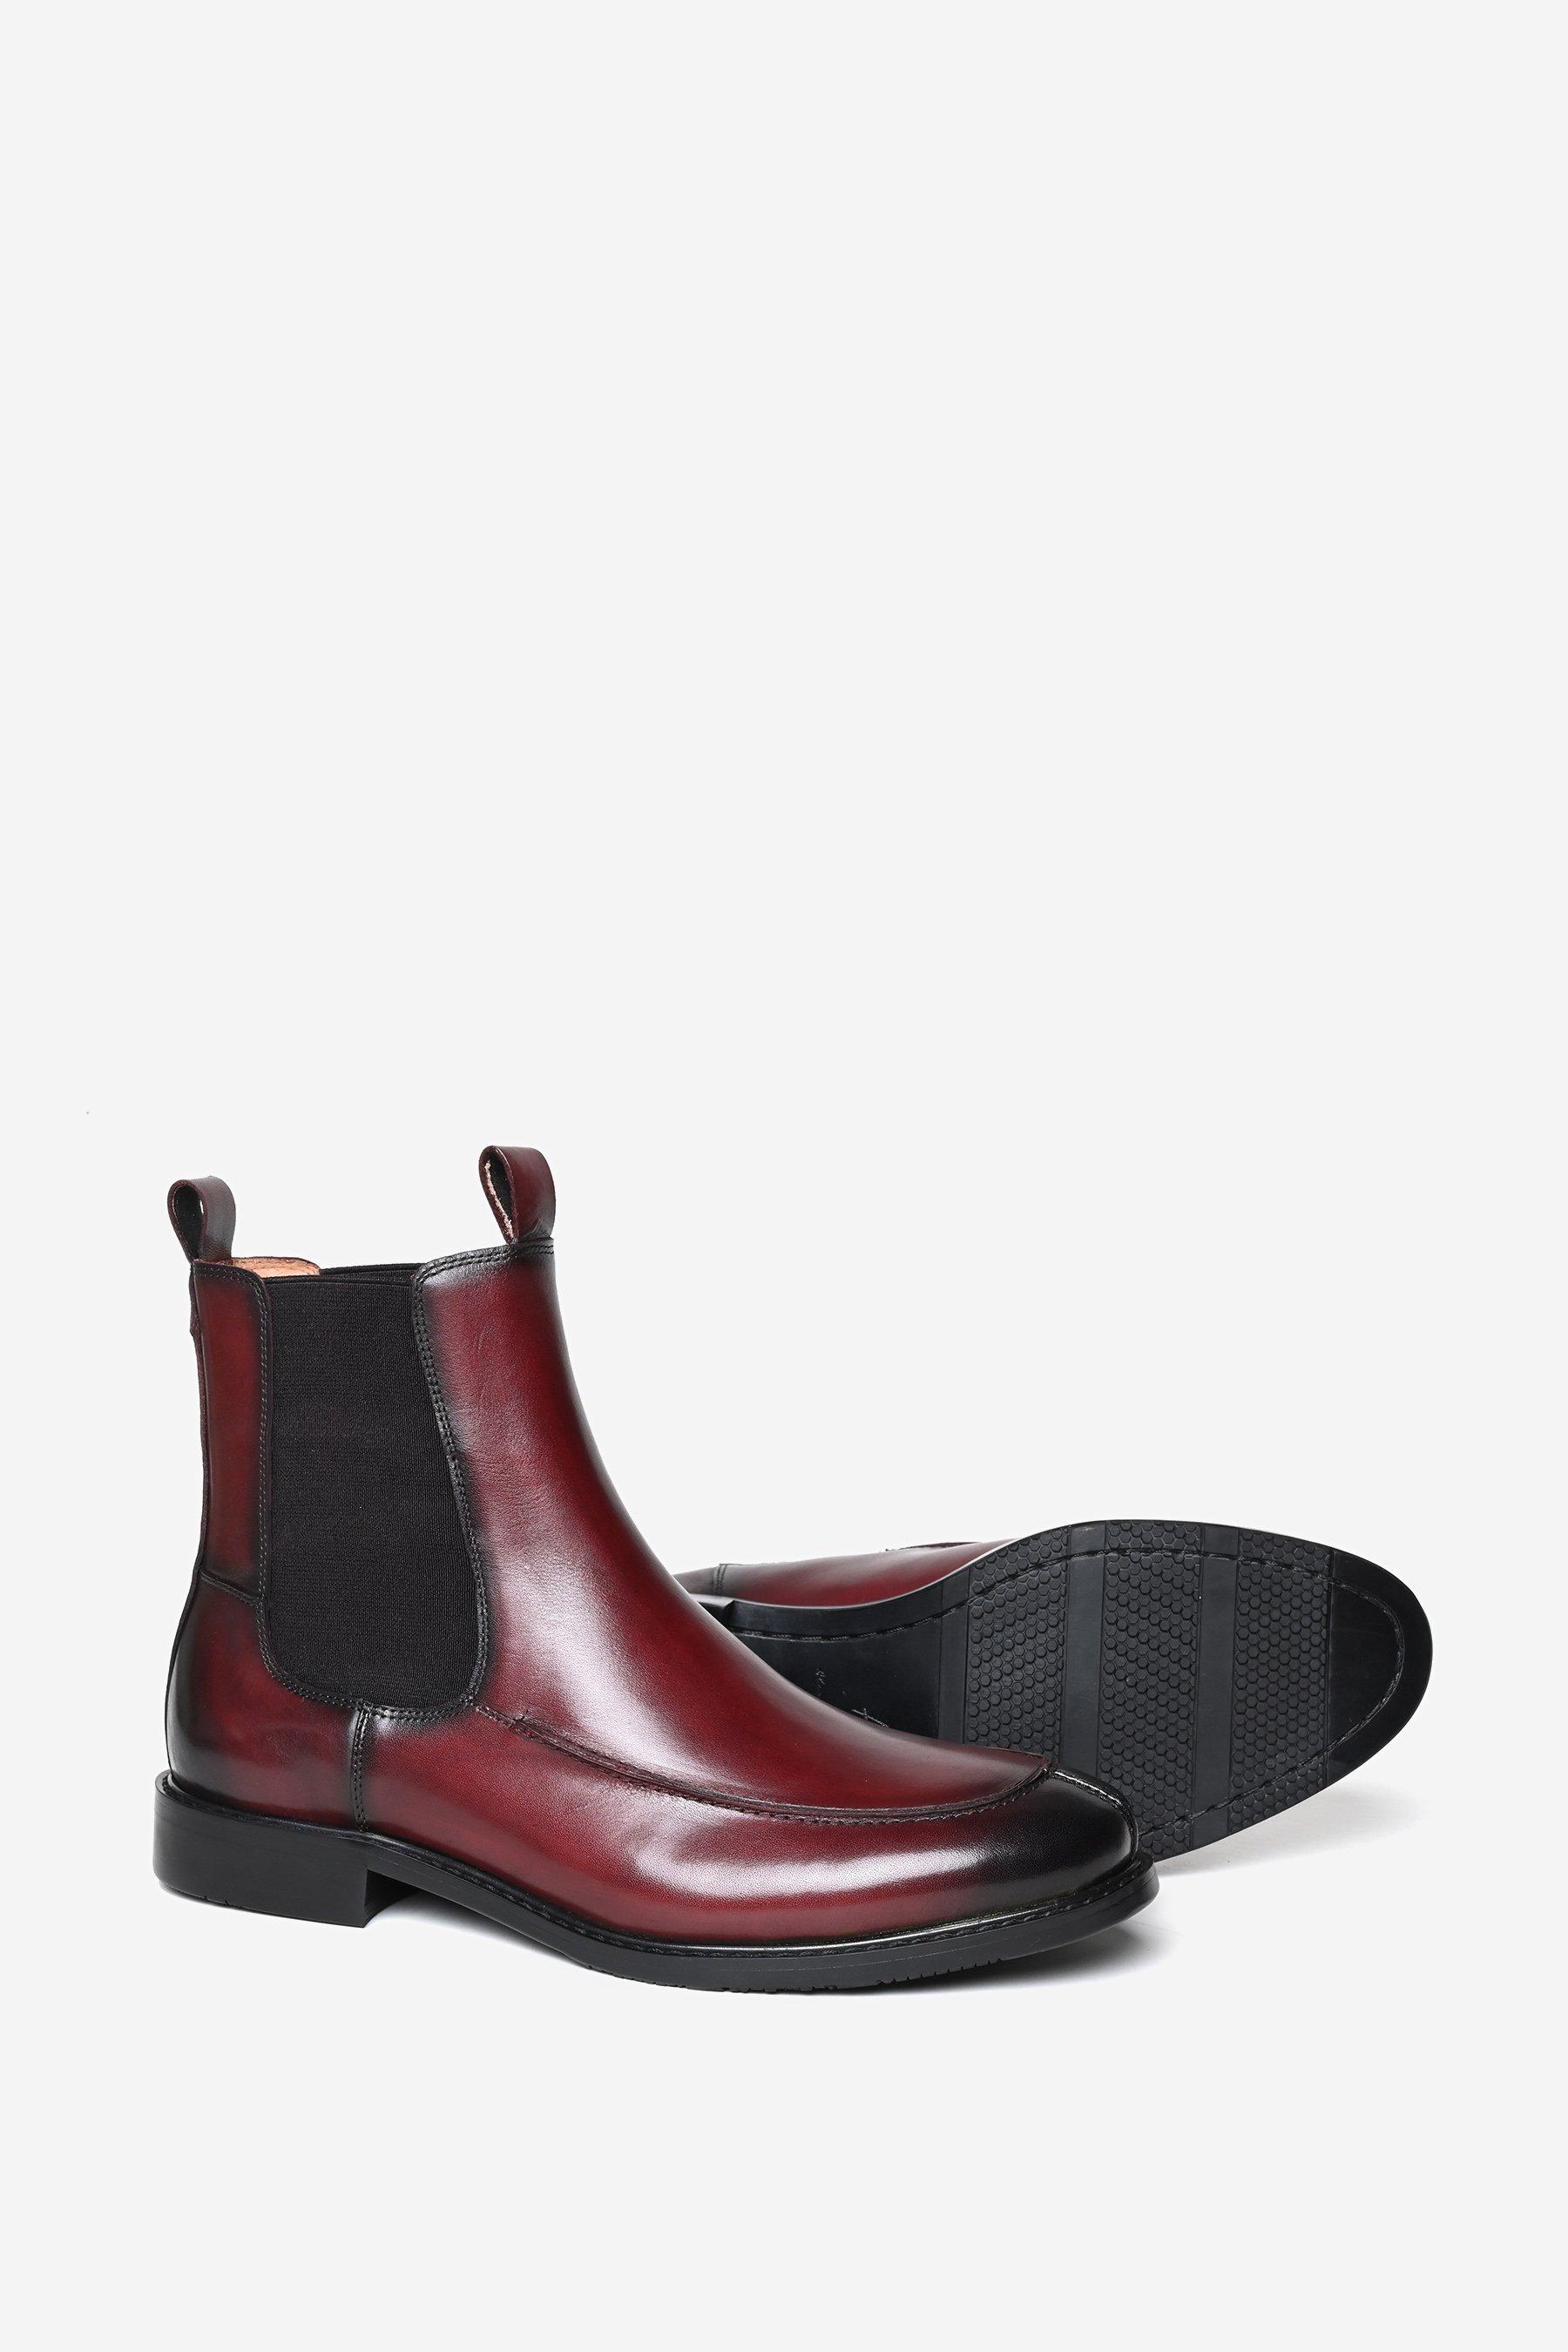 Кожаные ботинки челси премиум-класса Finsbury Alexander Pace, коричневый черные ботинки челси pablo marni цвет black